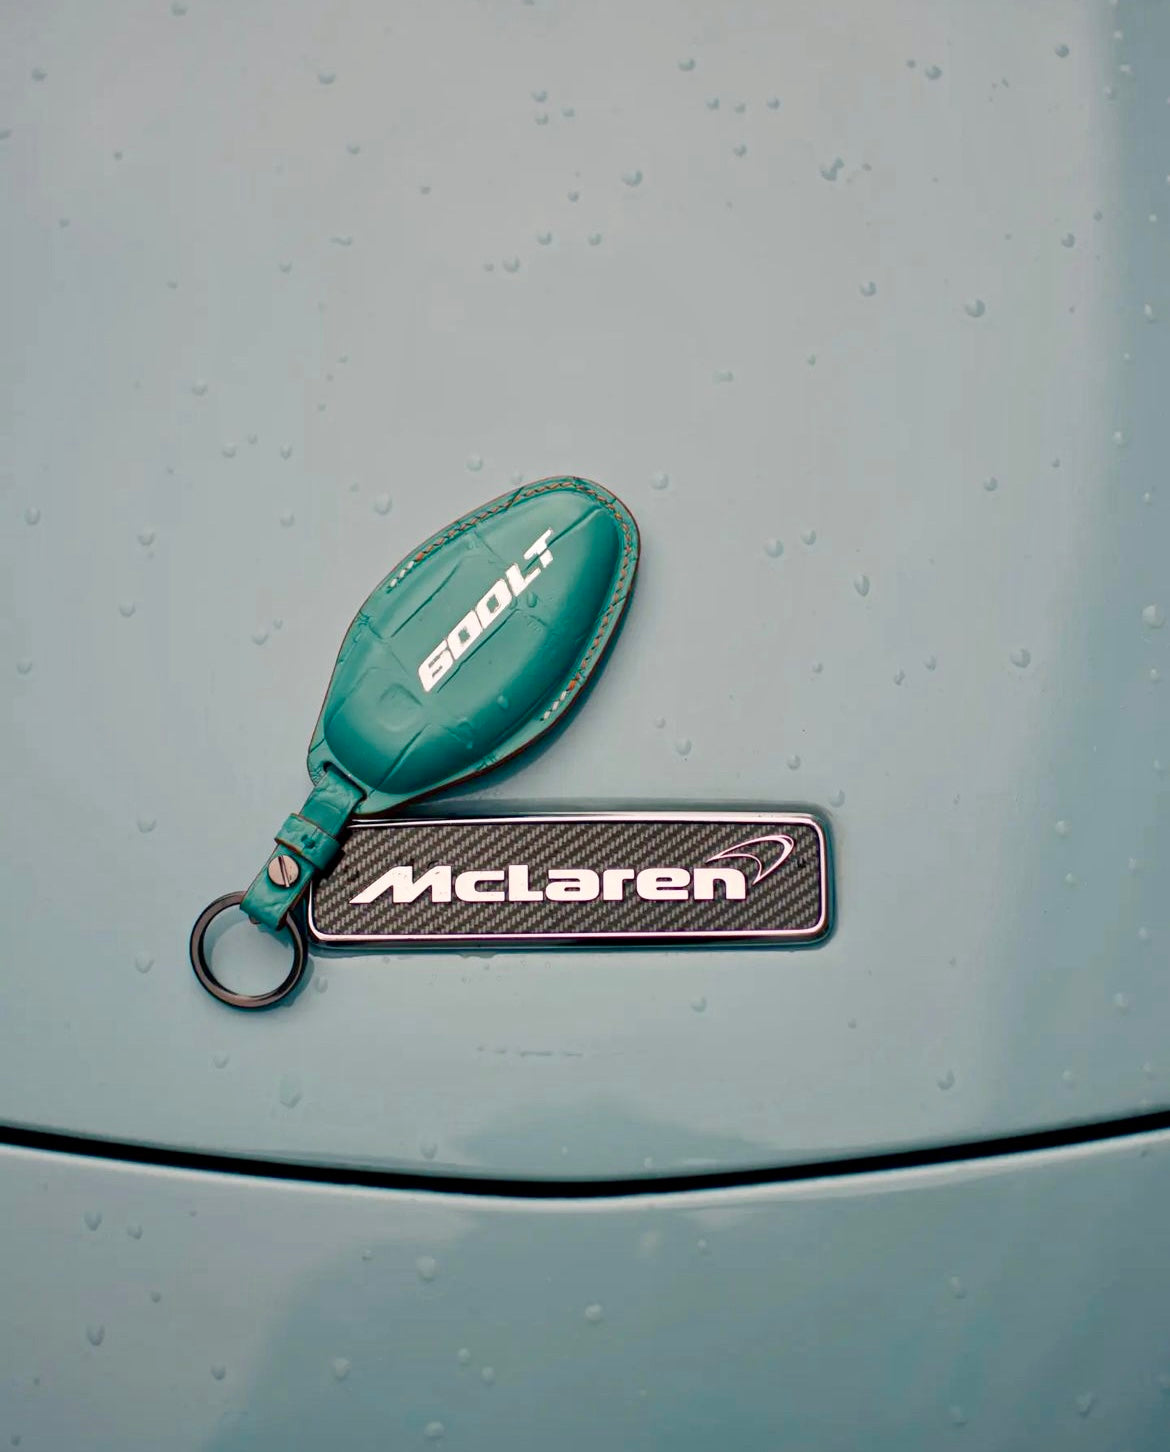 McLaren Key Cover Model Type 1 - CUSTOM ORDER YOURS